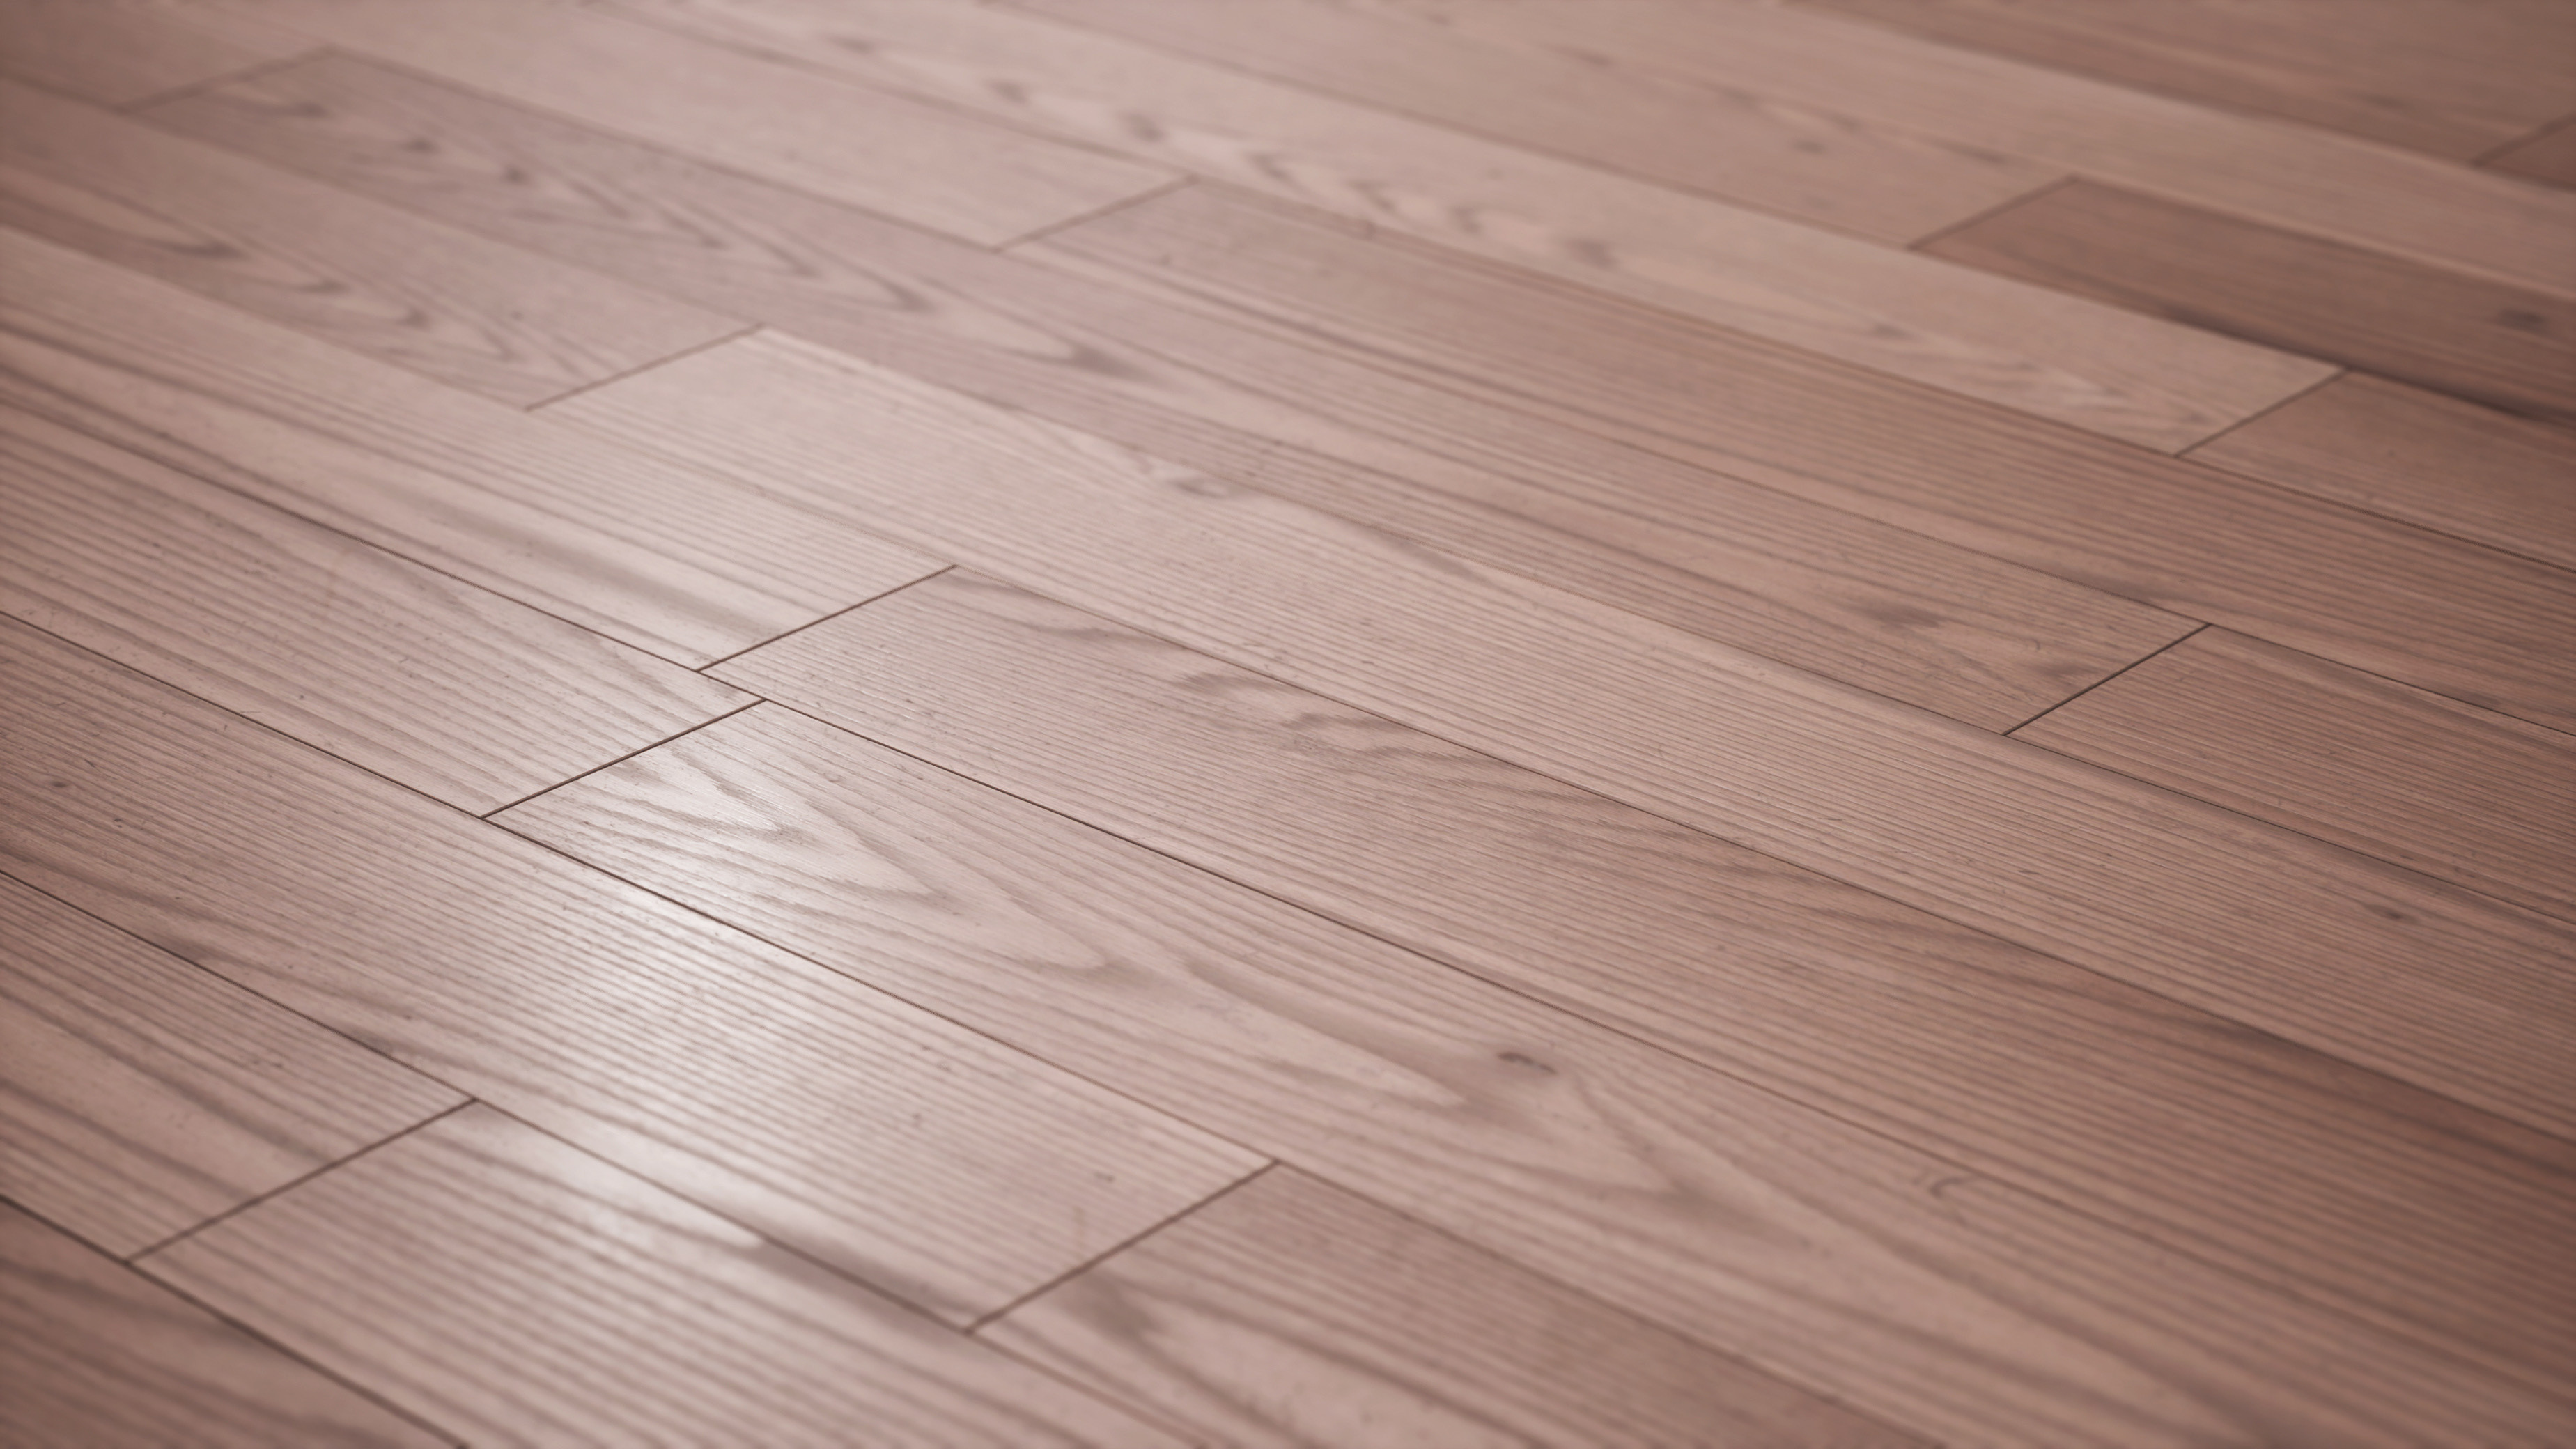 Oak wood flooring, Natural hardwood beauty, Artistic oak textures, Elegant home decor, 3700x2080 HD Desktop